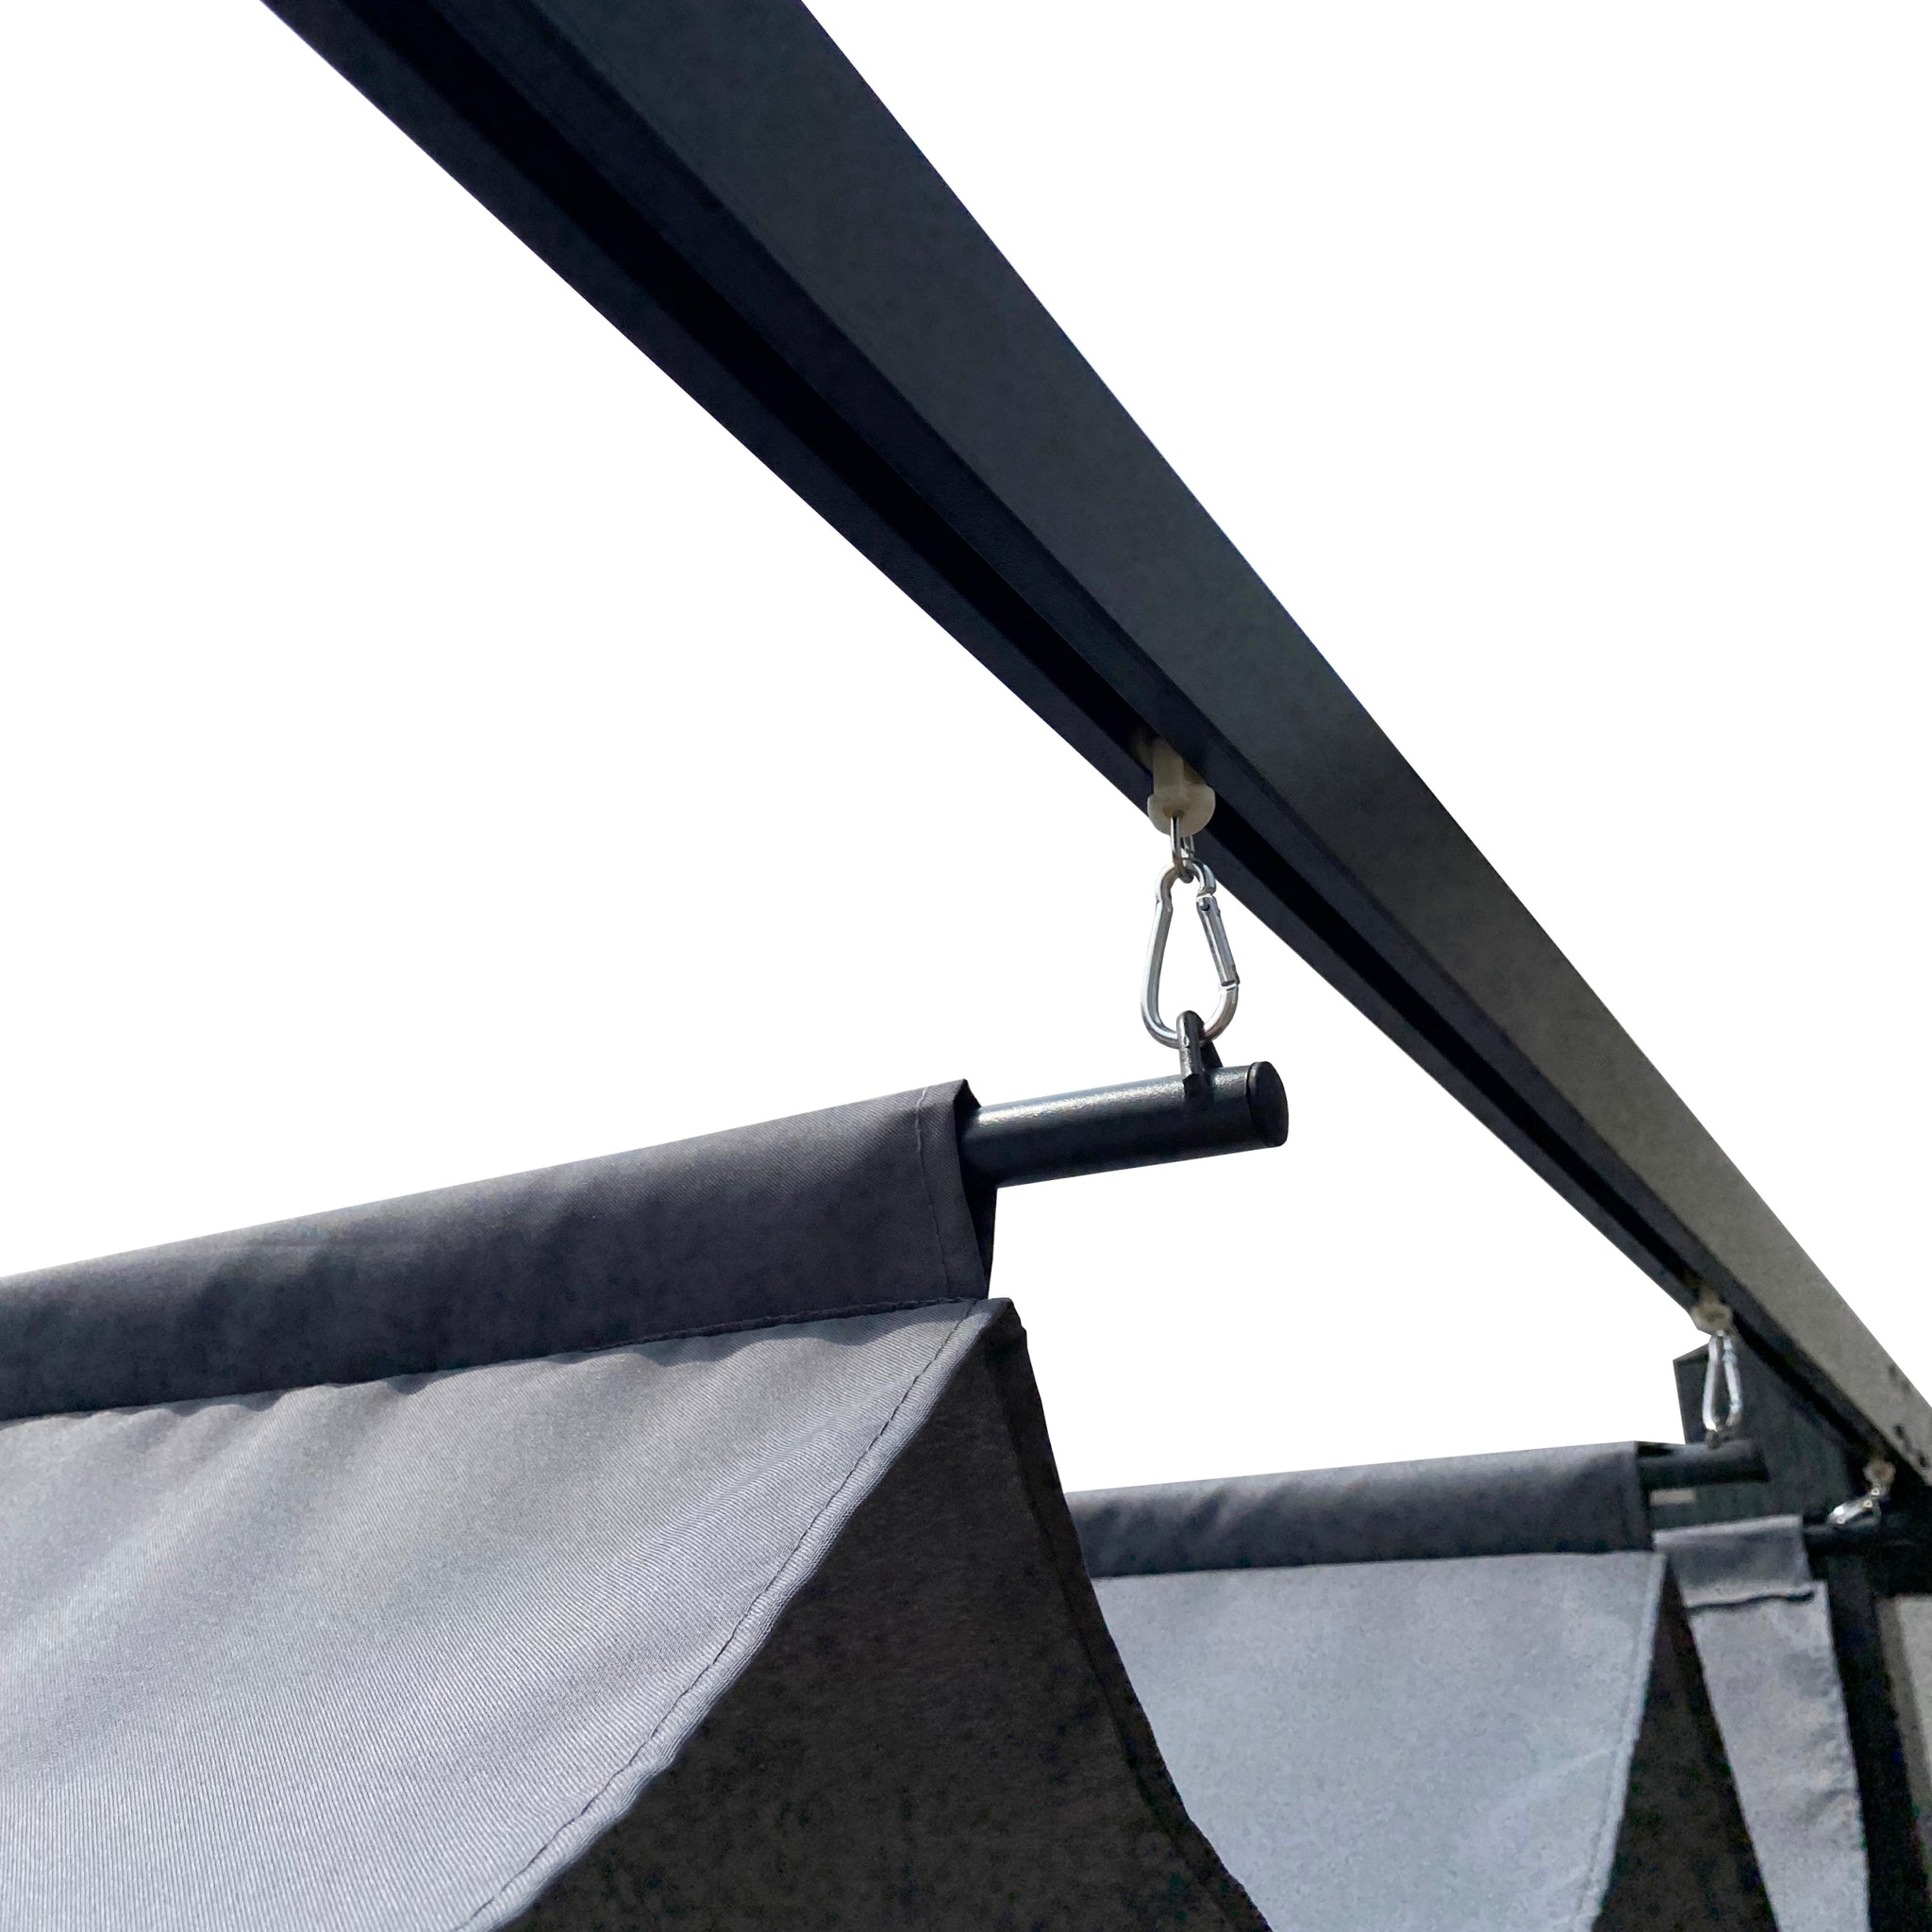 13x10 Ft Outdoor Patio Retractable Pergola With Canopy gray-aluminium